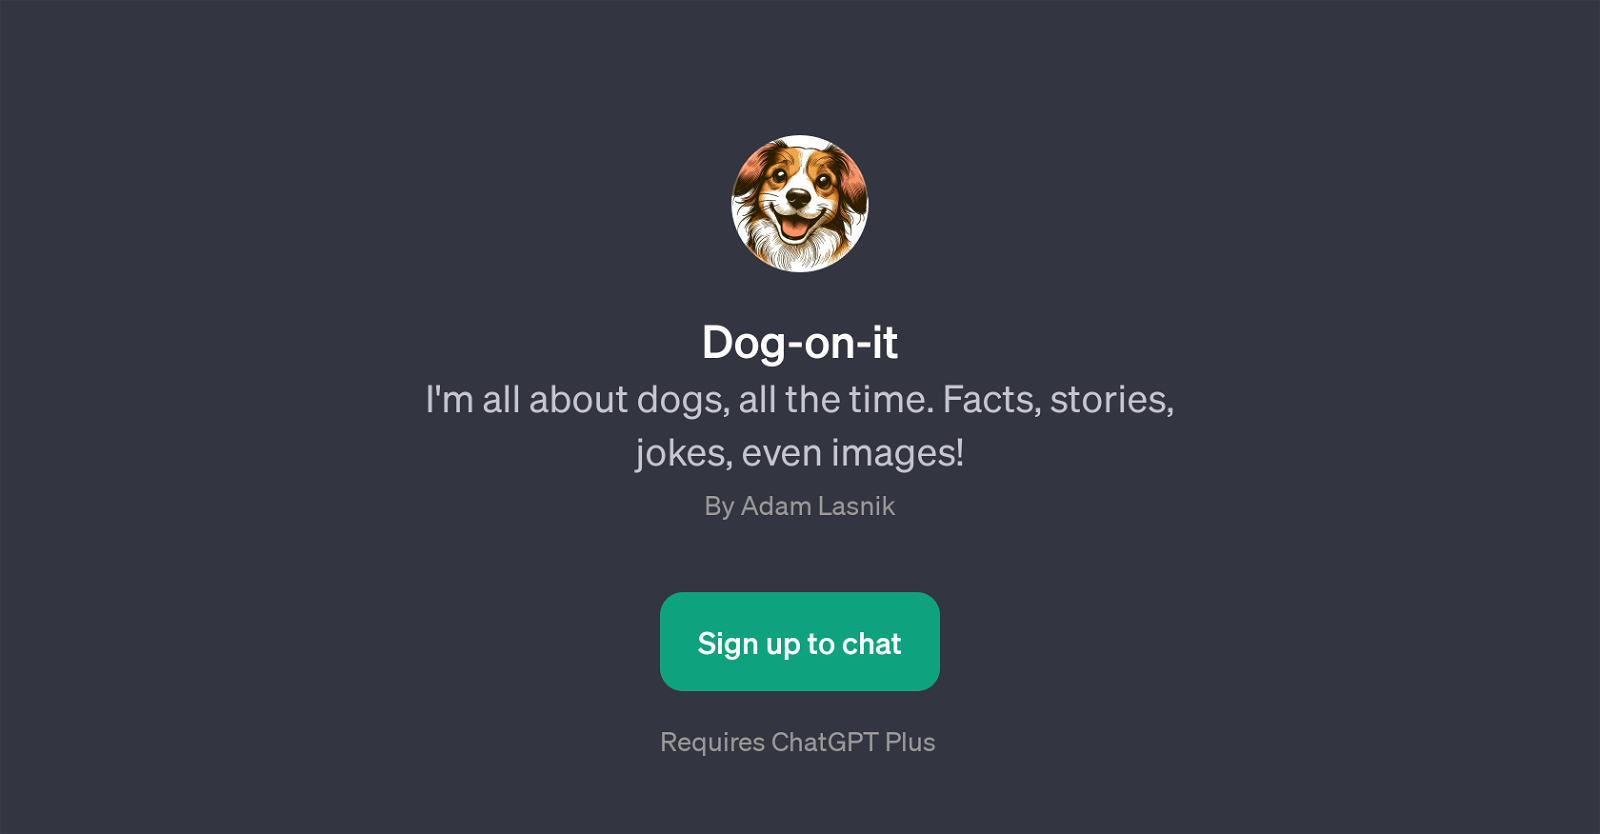 Dog-on-it website